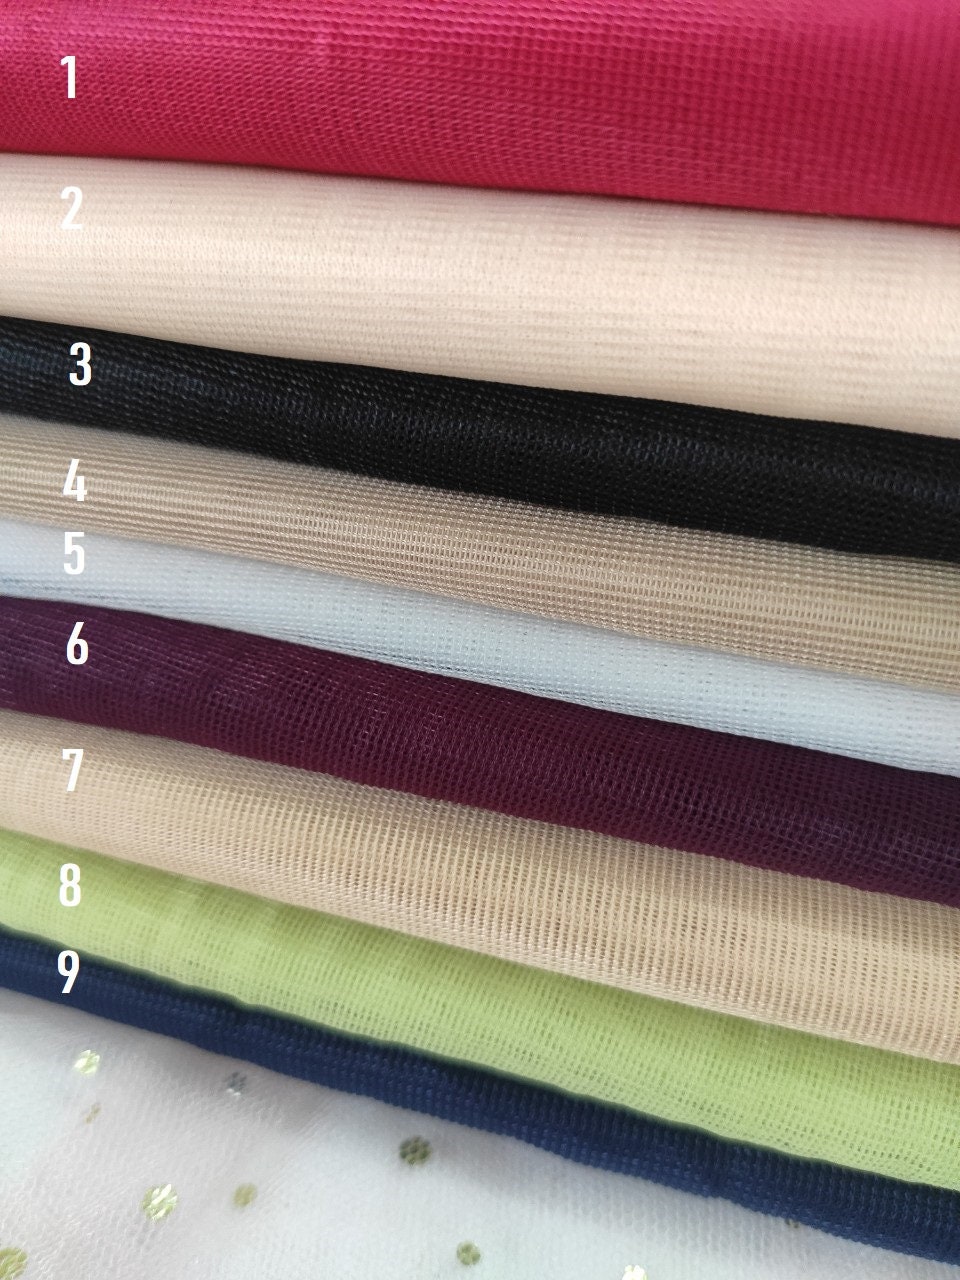 DIY Bra Kit. Scuba Fabric . Inc Fabric and Notions. Watson Bra 